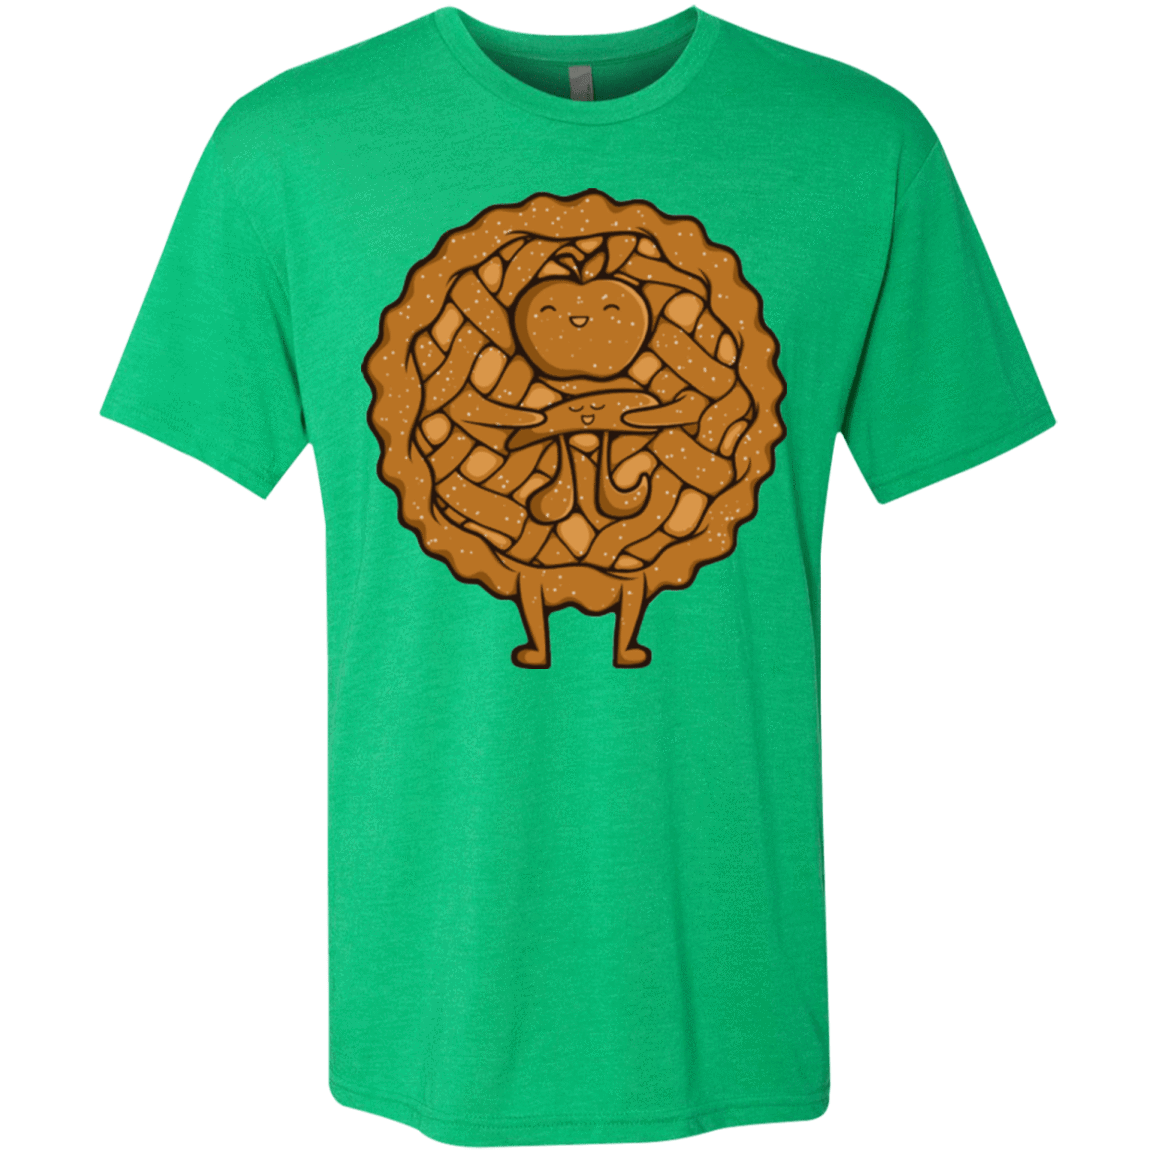 T-Shirts Envy / Small Apple Pie Men's Triblend T-Shirt